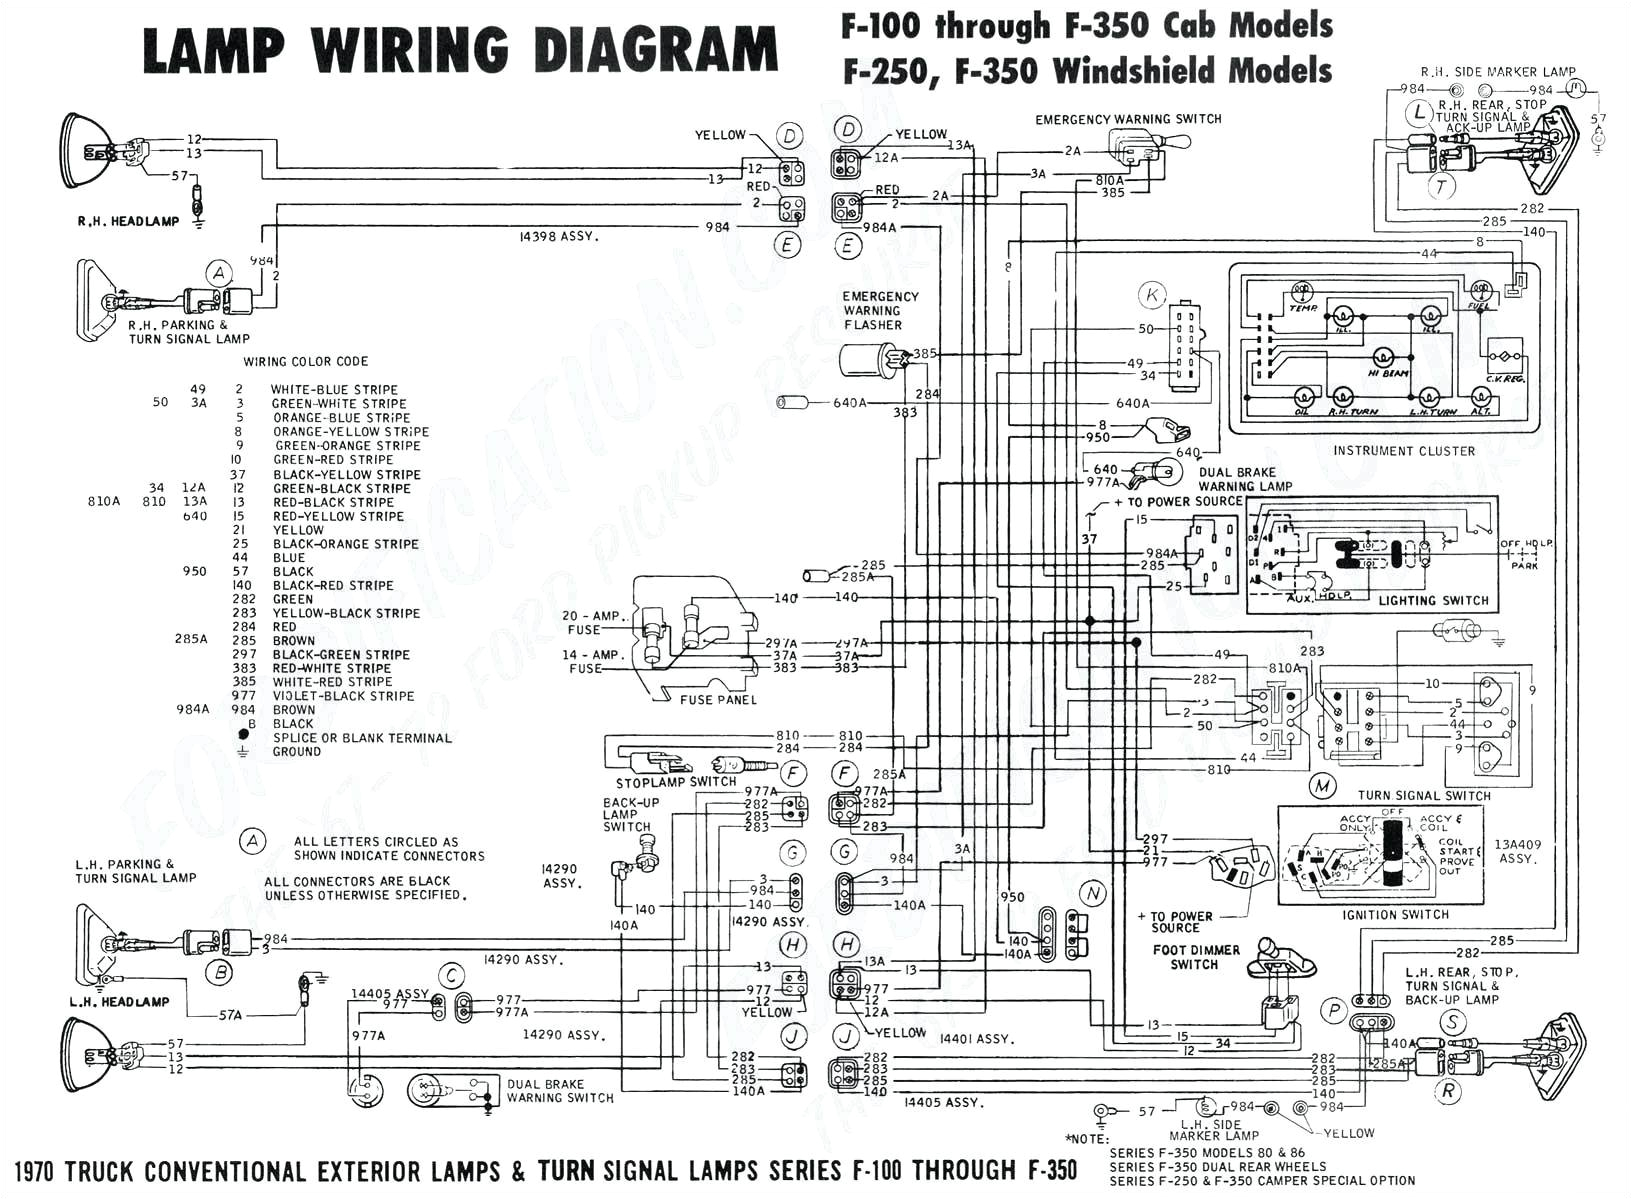 02 wrx fuse box diagram wiring diagram centre wiring fuse box diagram fuse box diagram for